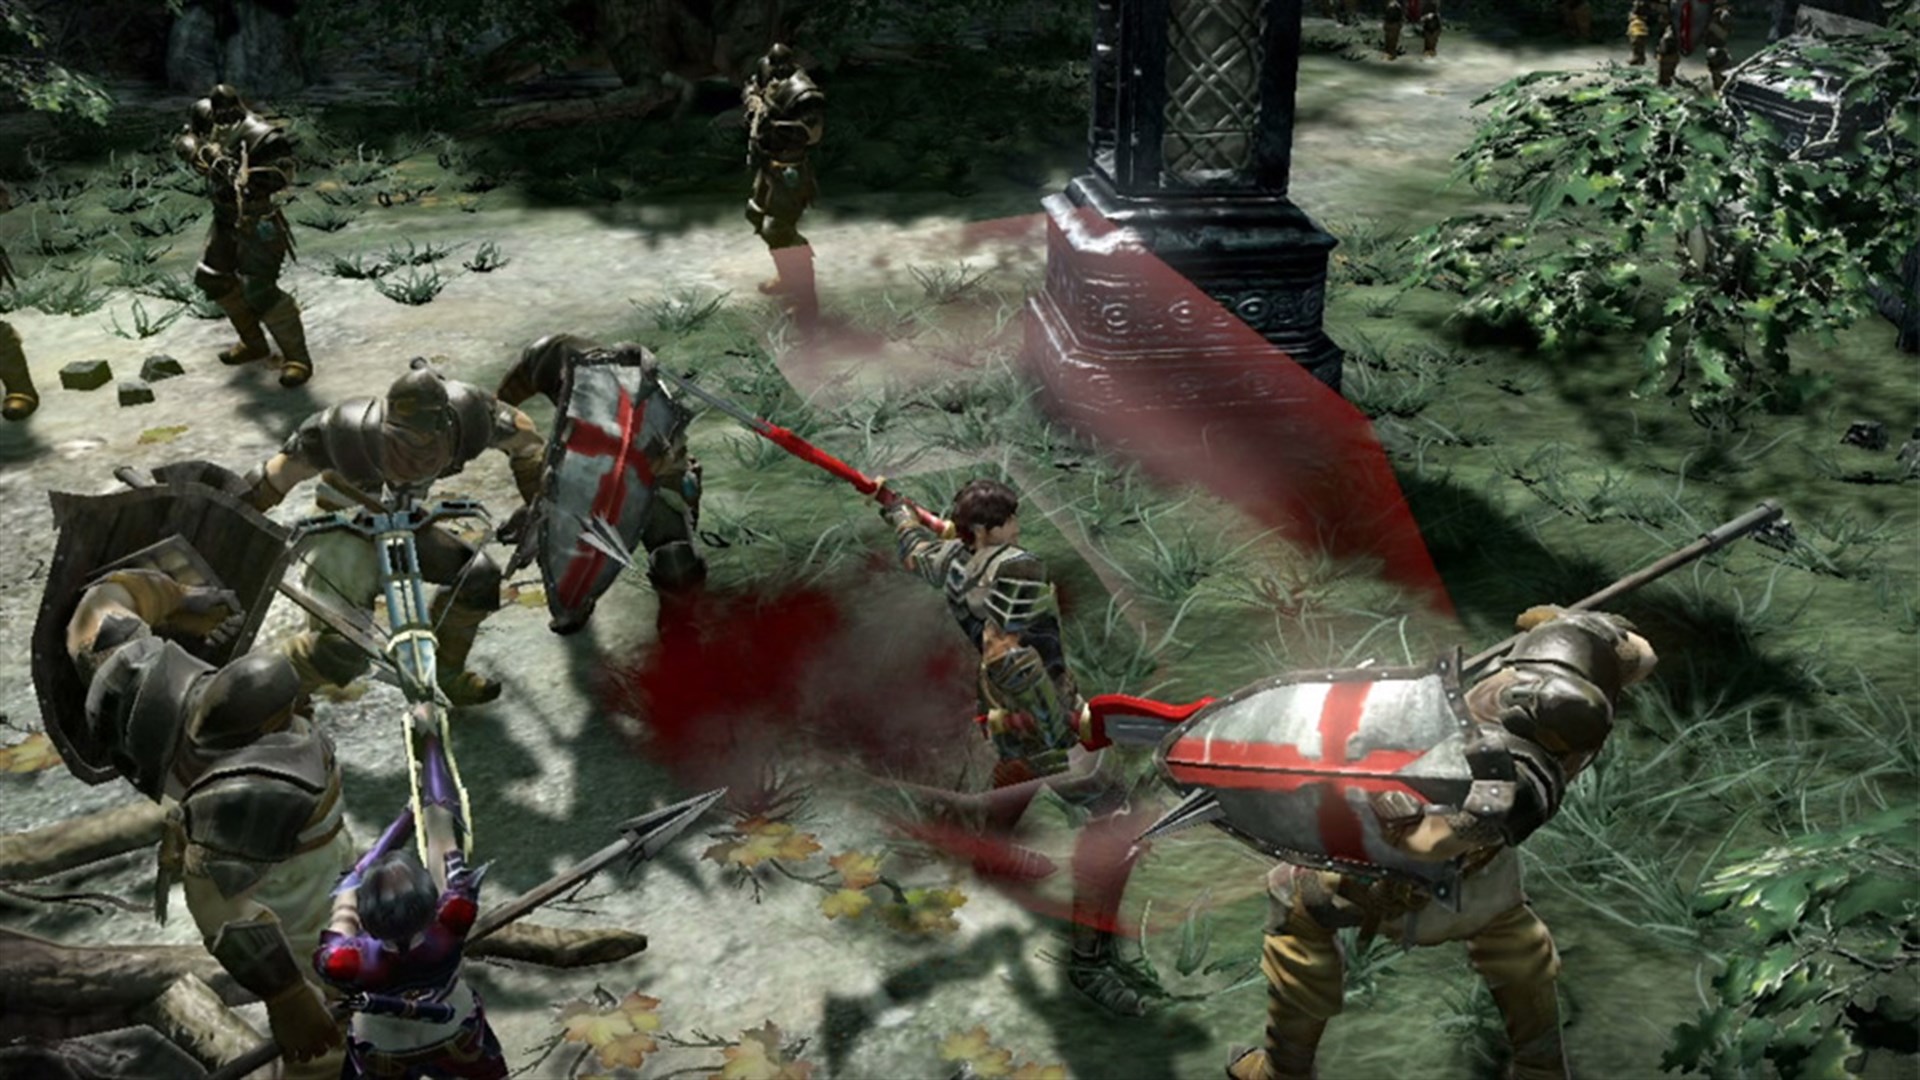 Старая игра про рыцарей. Игра Blood Knights. Blood Knights Xbox 360. Blood Knights deck13 interactive. Игра про рыцарей на Xbox 360.